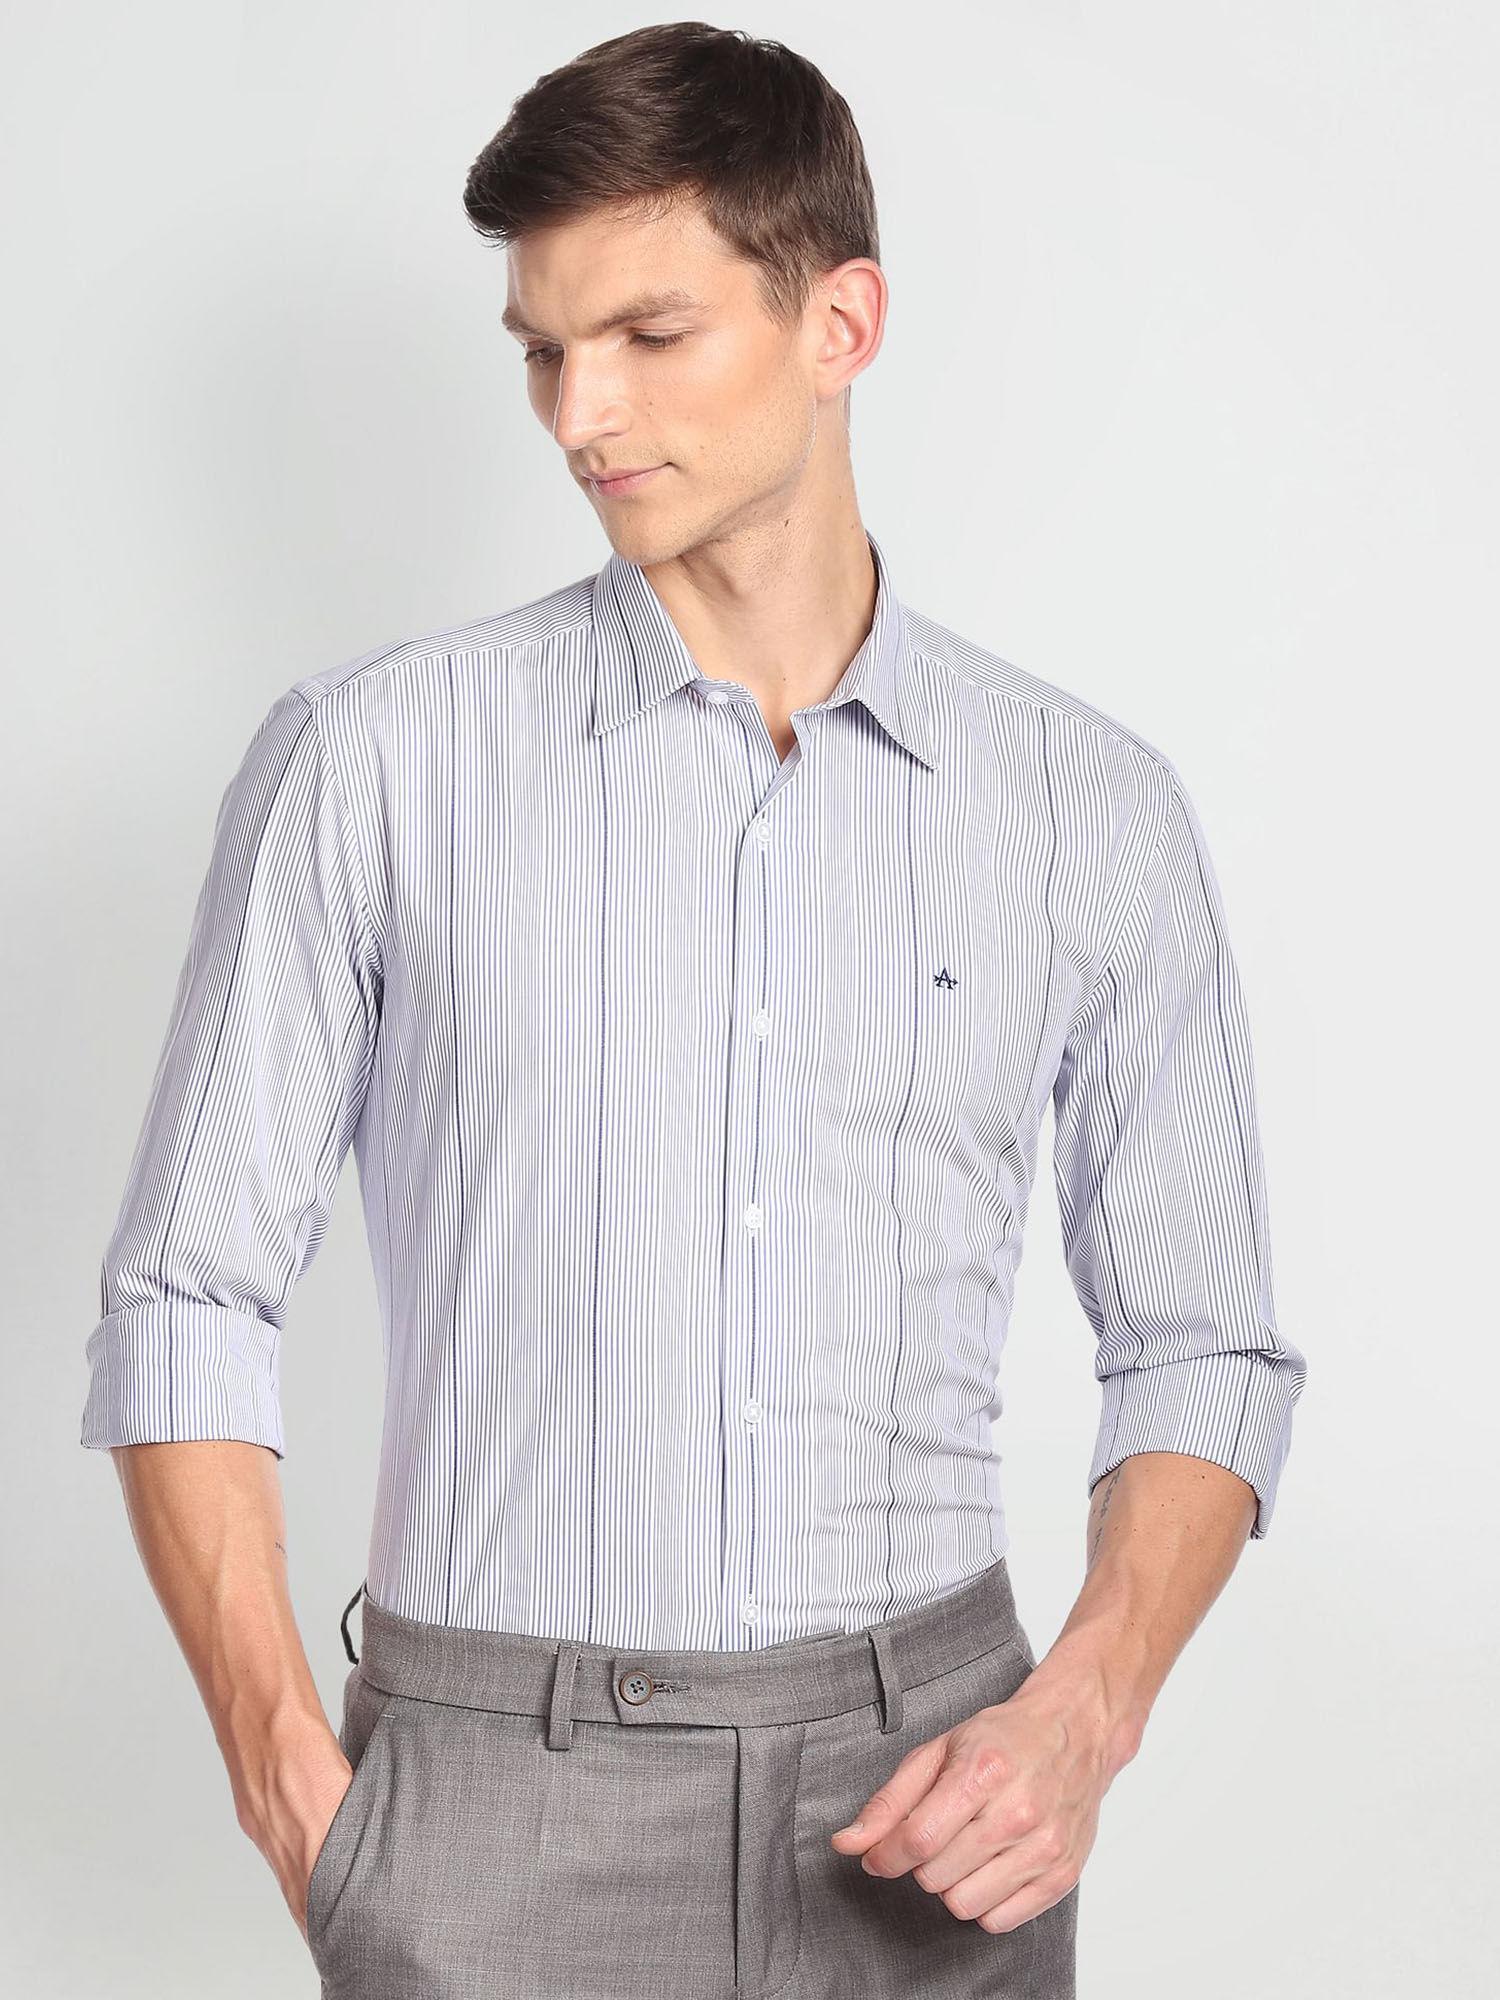 arrow new york vertical stripe cotton formal shirt